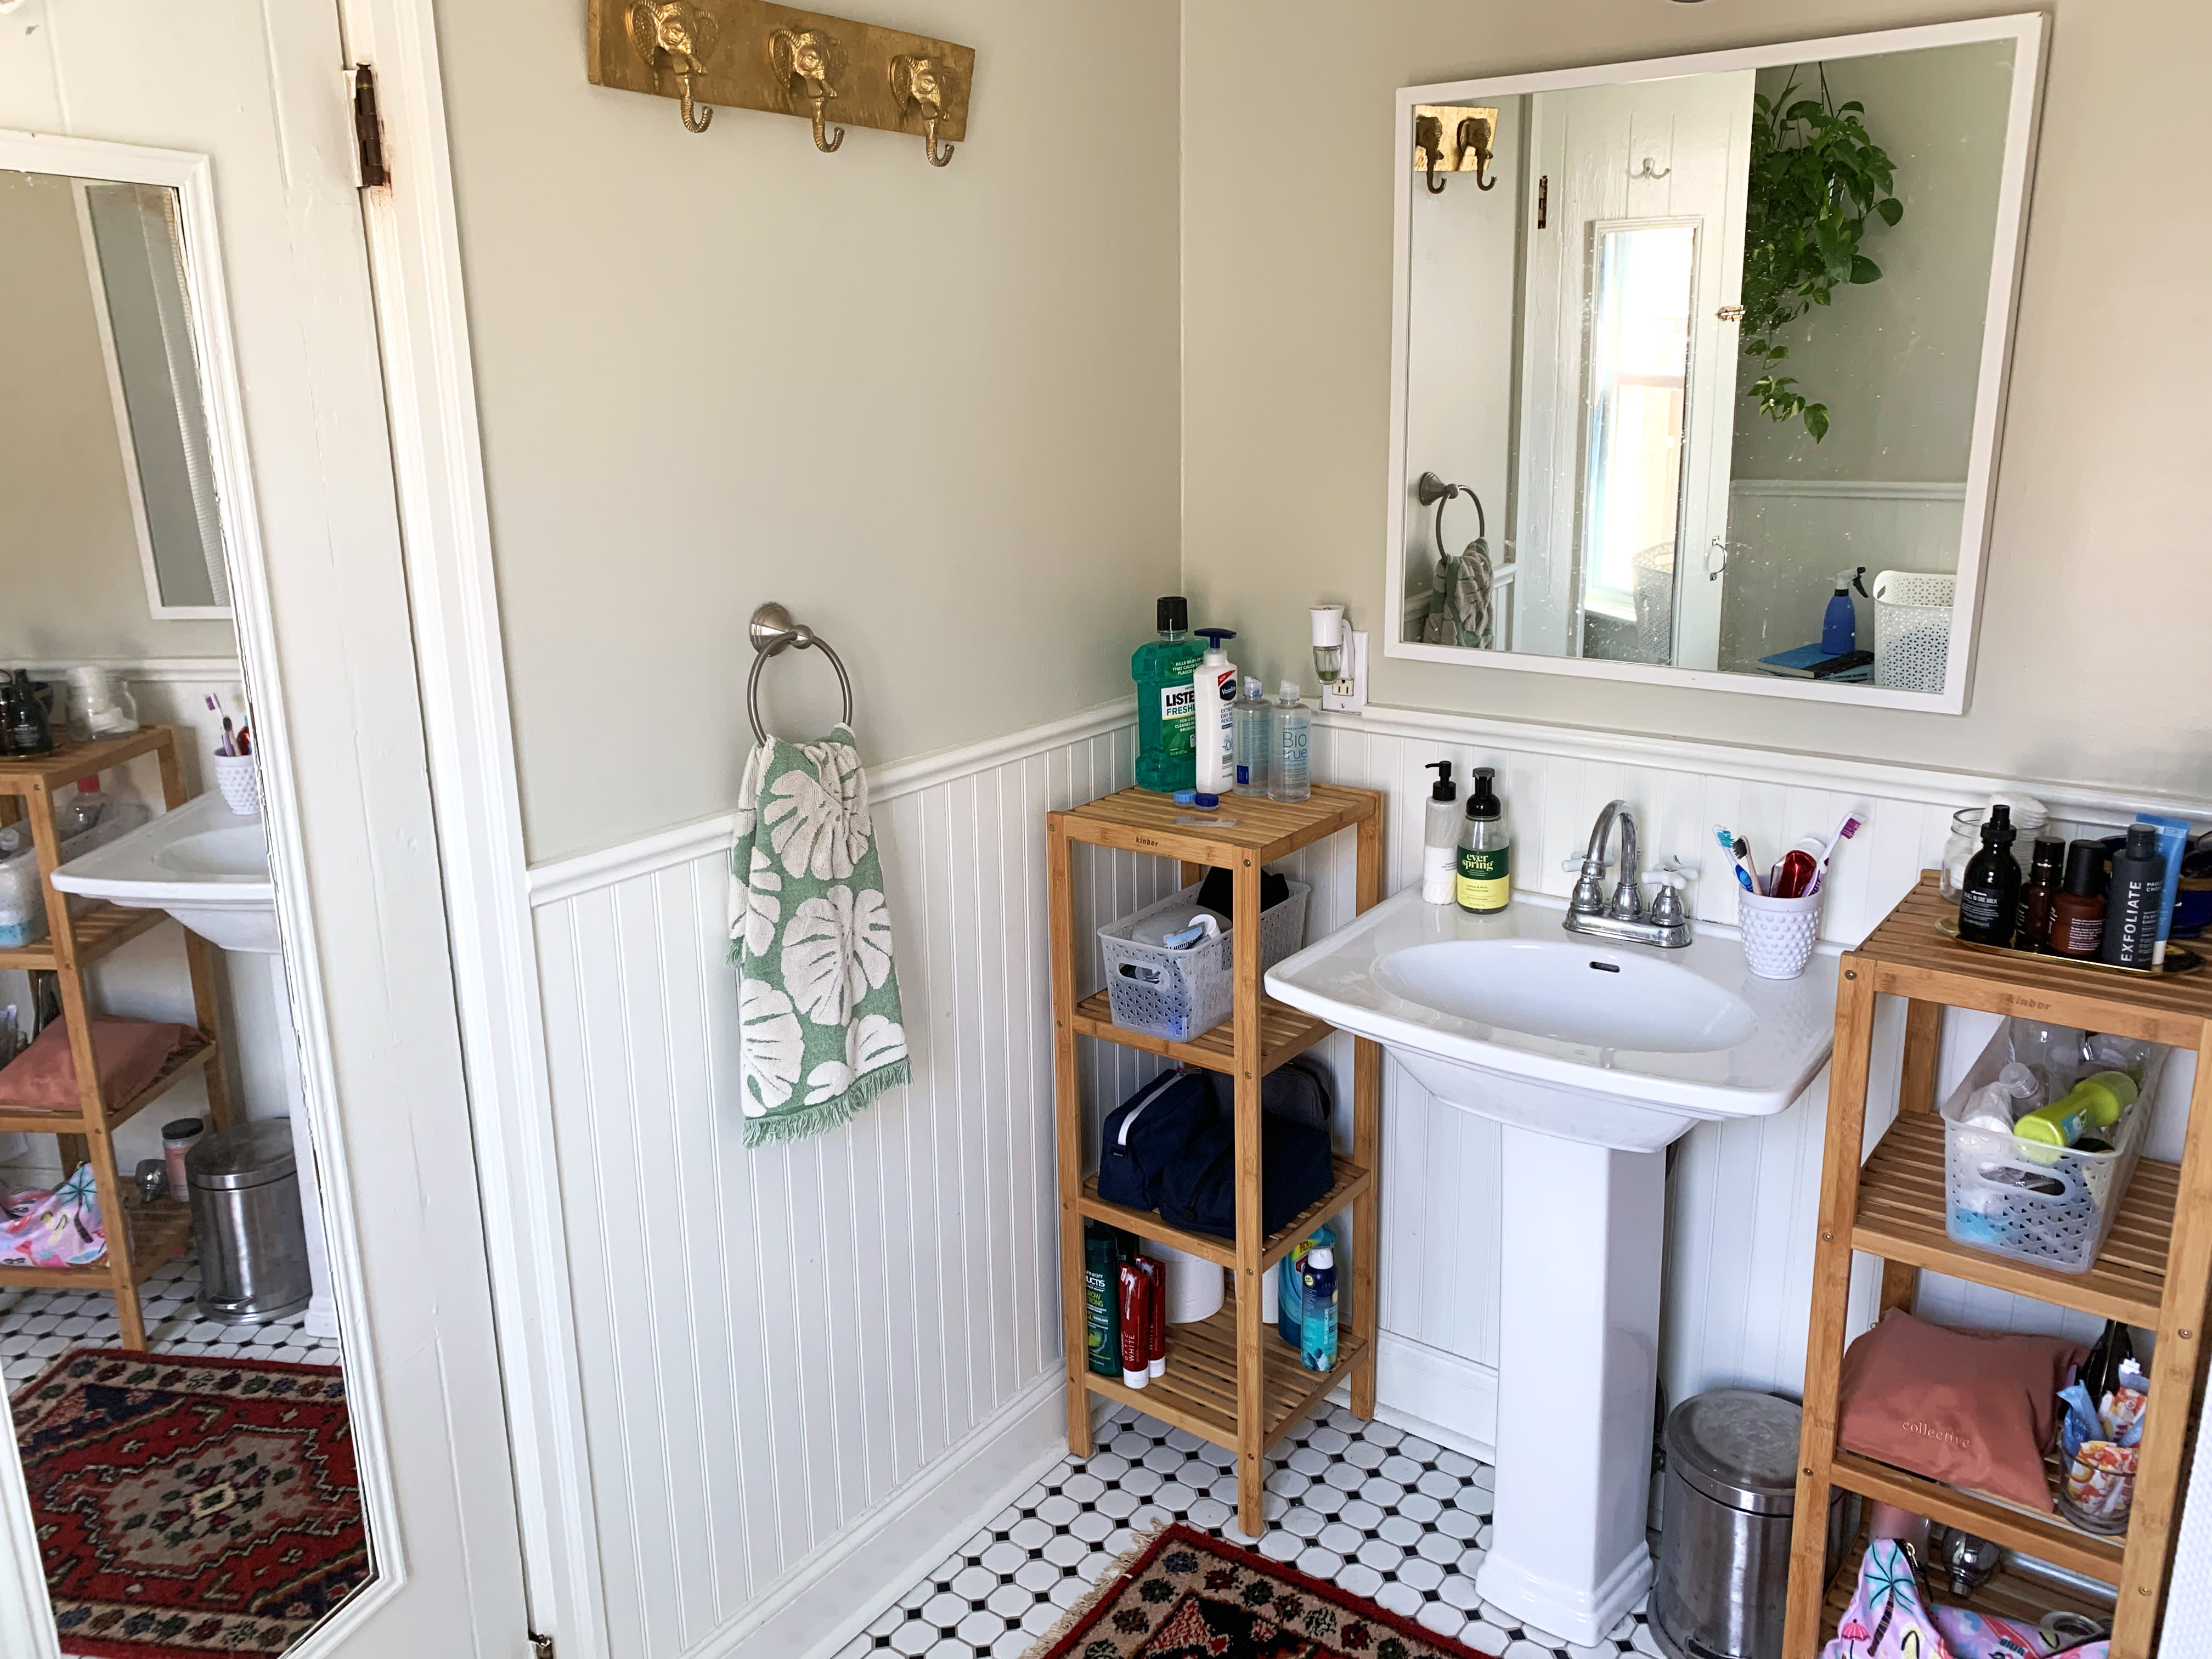 https://cdn.apartmenttherapy.info/image/upload/v1563492528/at/living/olivia-bathroom-shelf-3.jpg